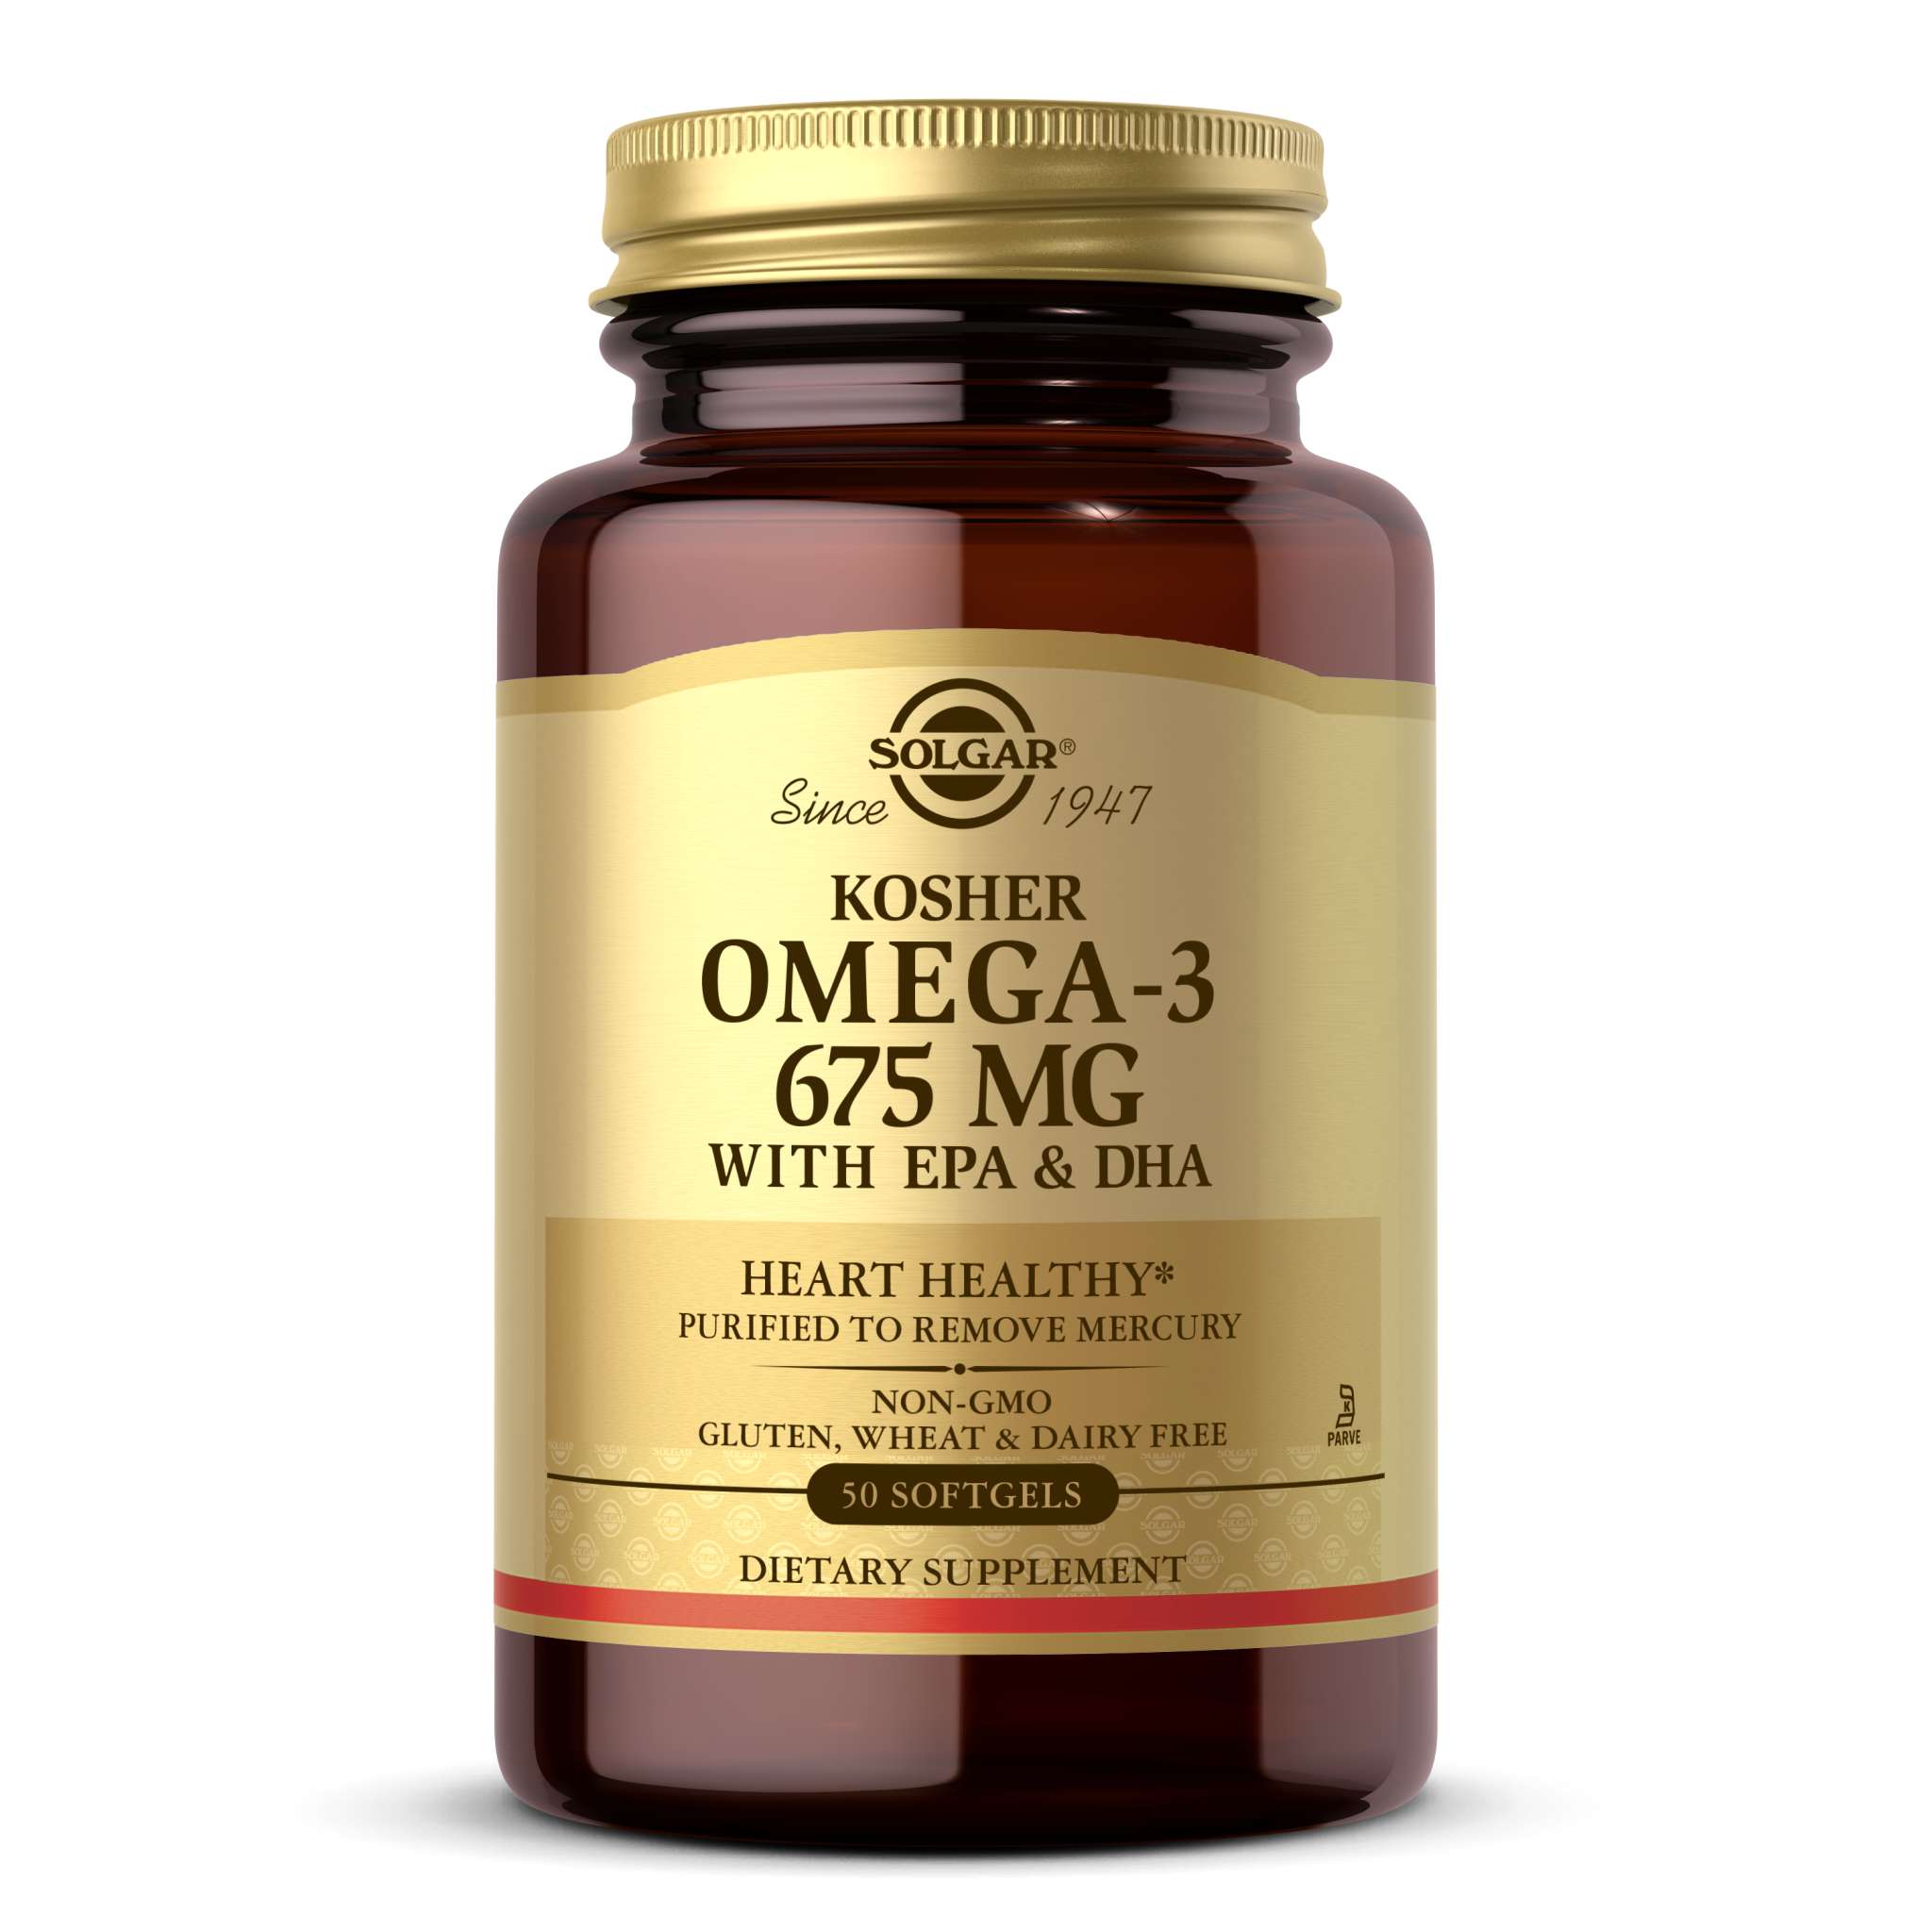 Solgar - Omega 3 675 mg Kosher softgel